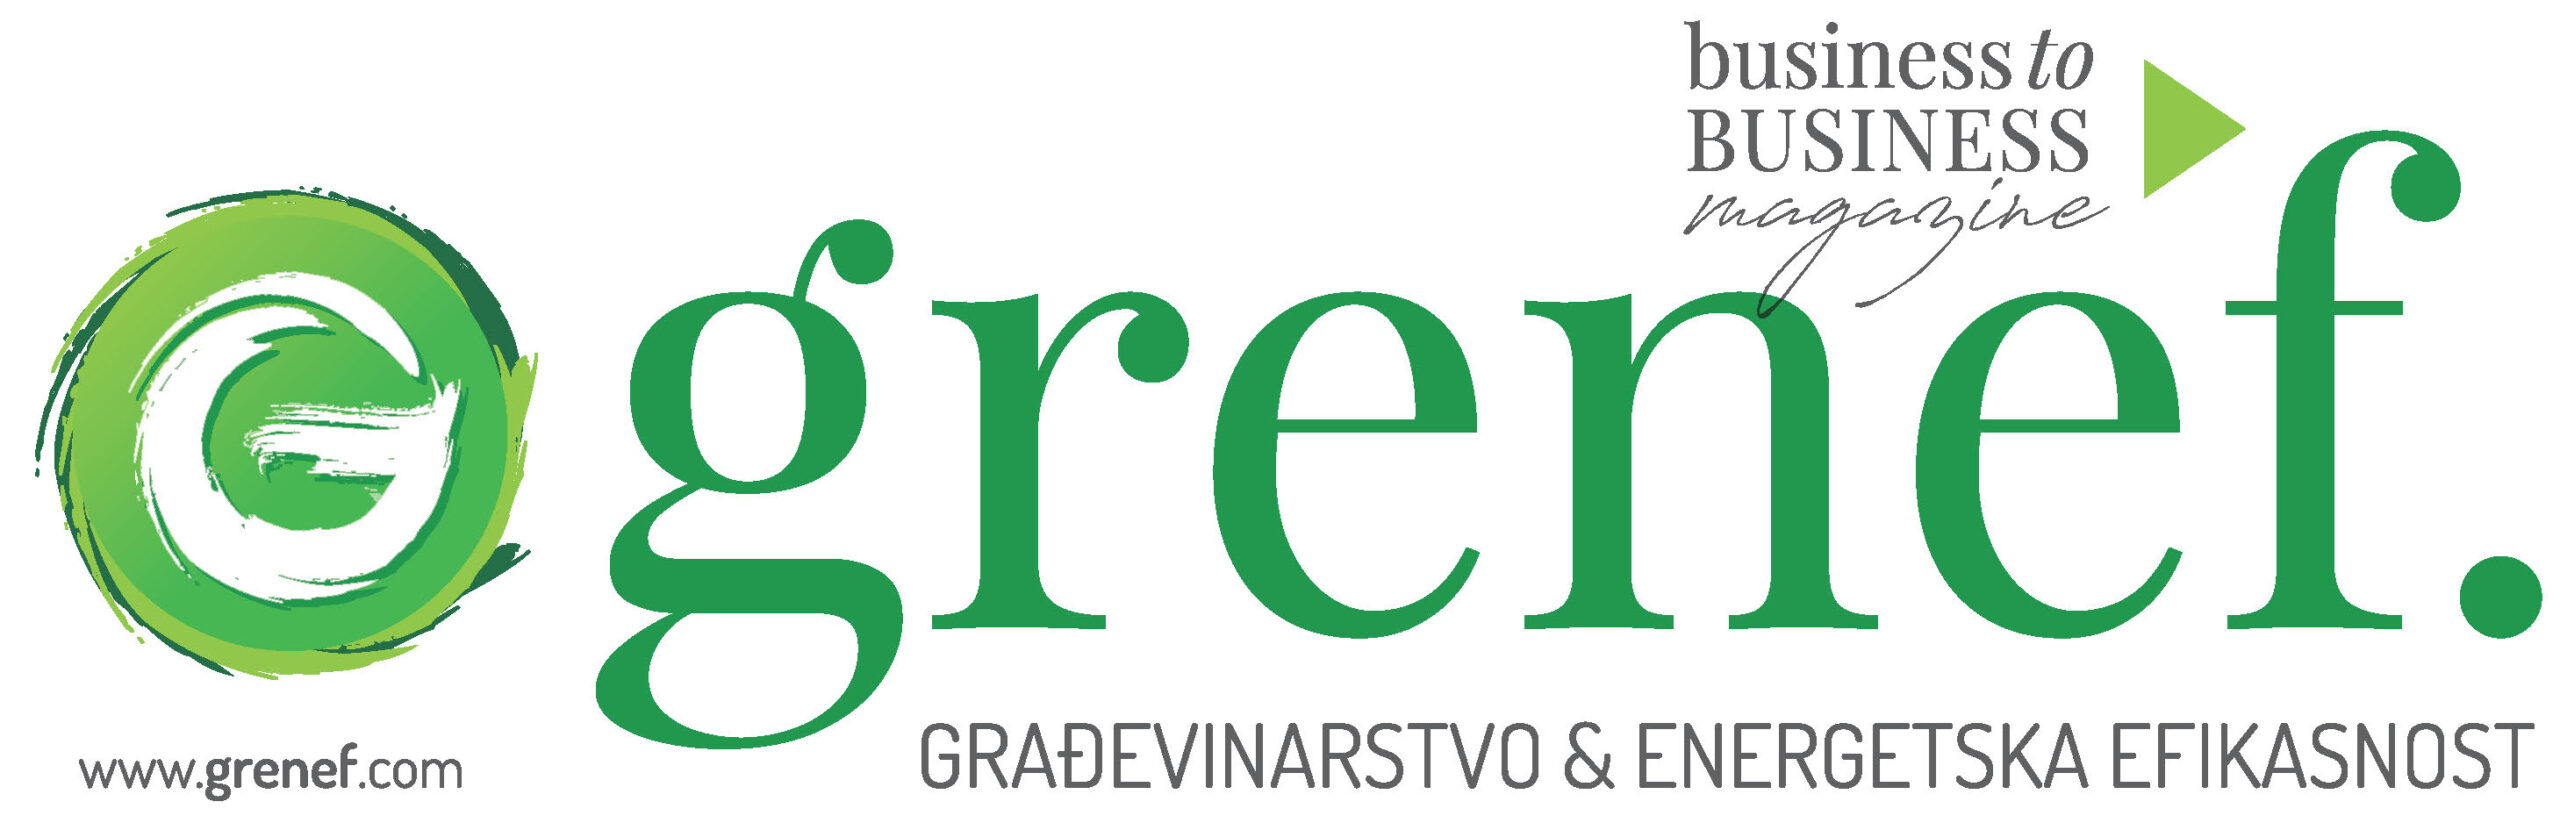 Grenef-logo-scaled.jpg